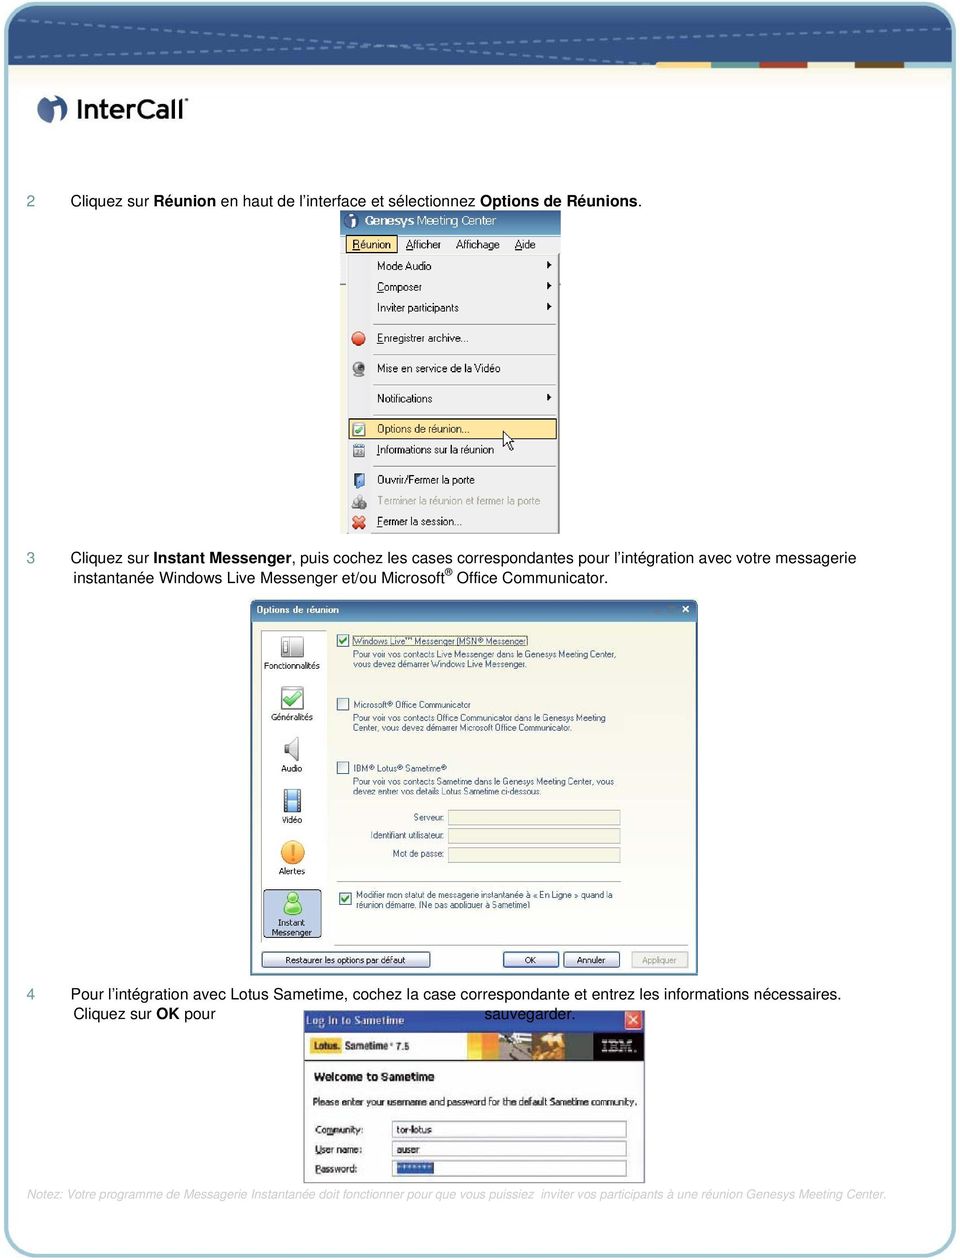 Messenger et/ou Microsoft Office Communicator.